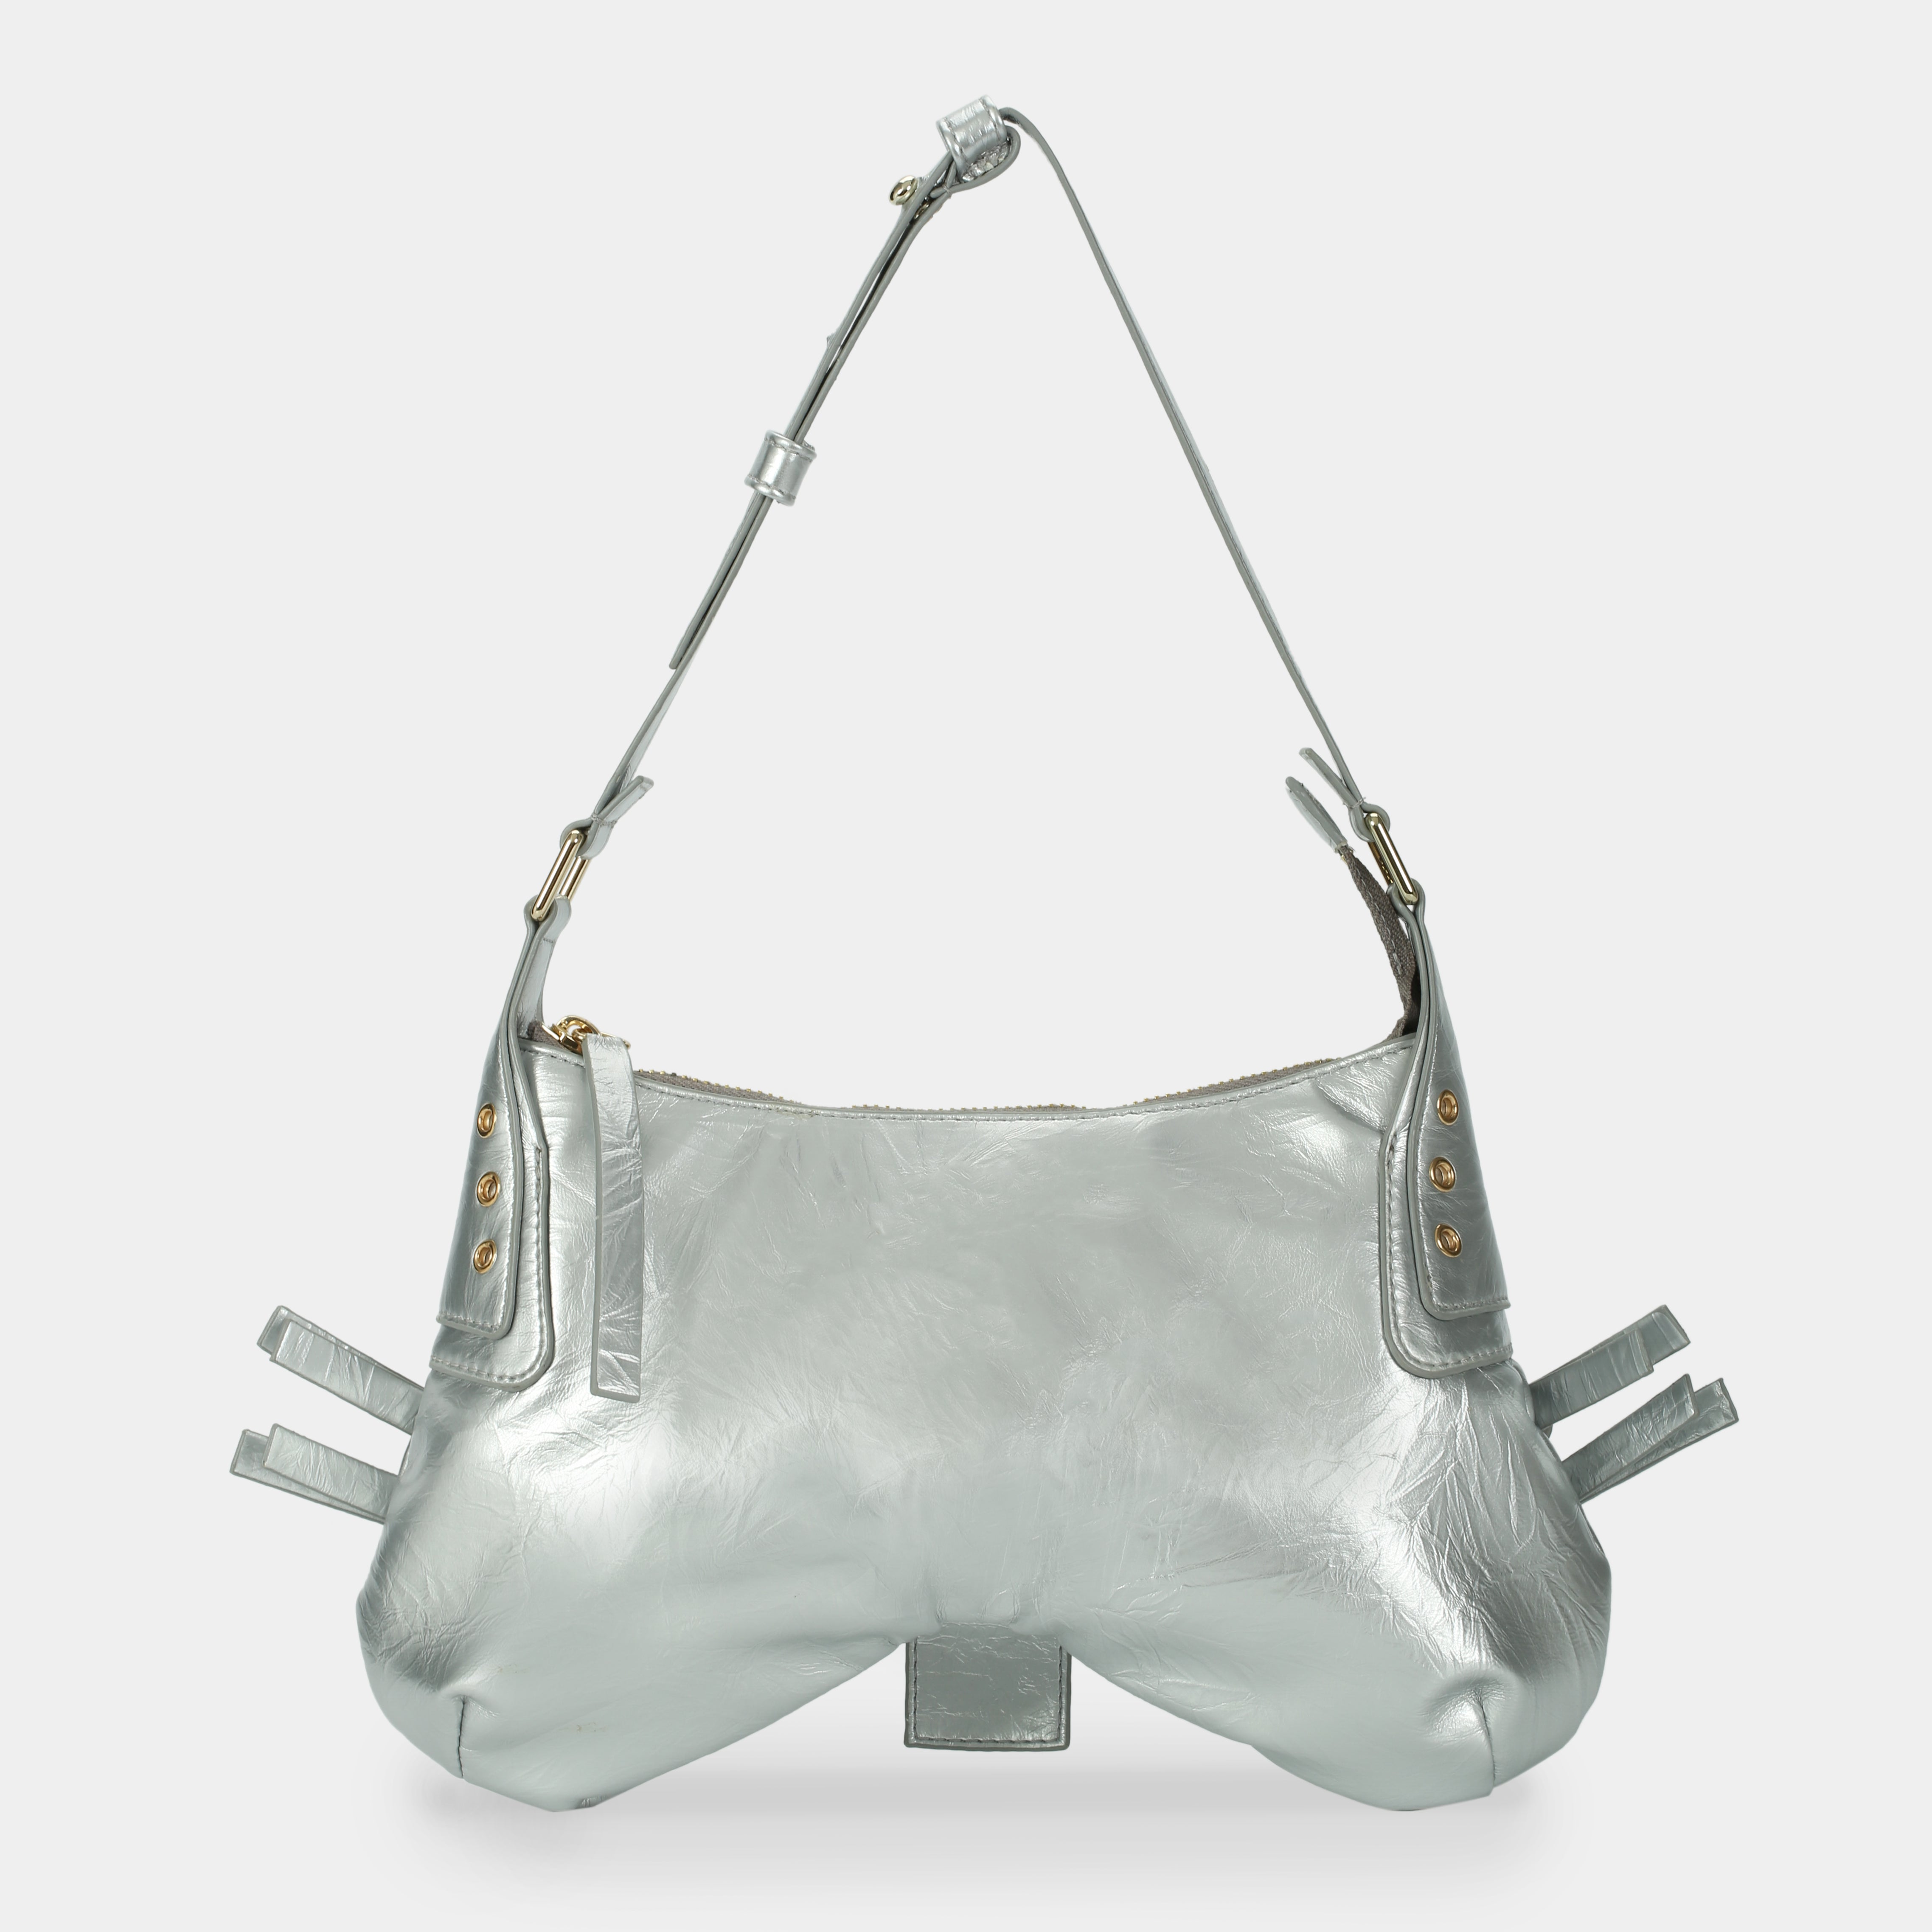 BUTTERFLY Handbag in Silver